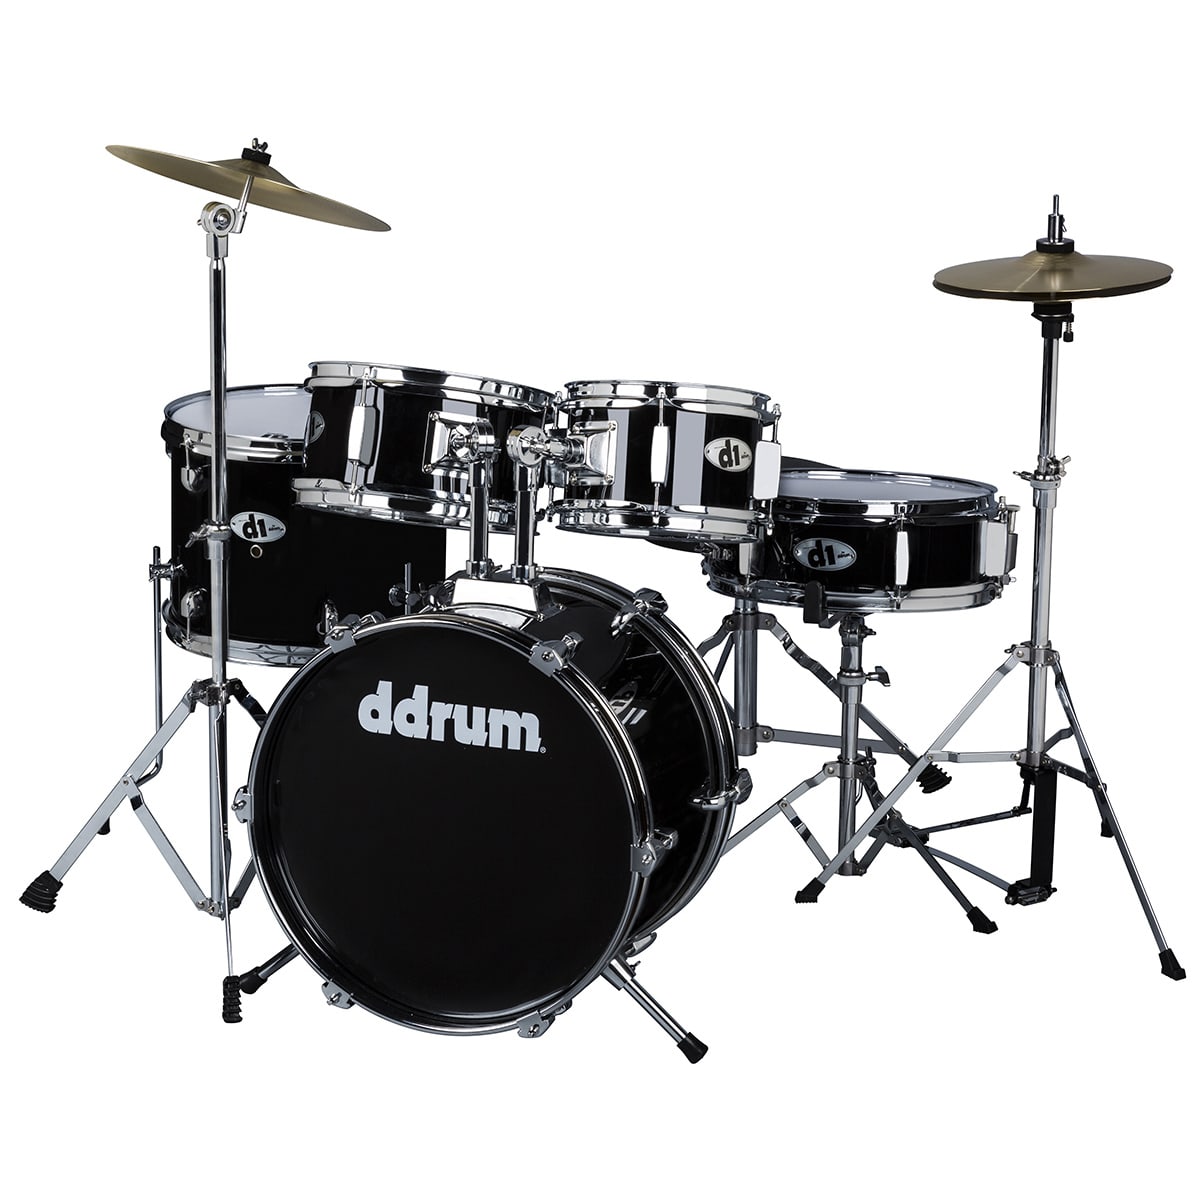 ddrum D1 Junior 5-Piece Drum Set, Complete with Cymbals, in Midnight Black